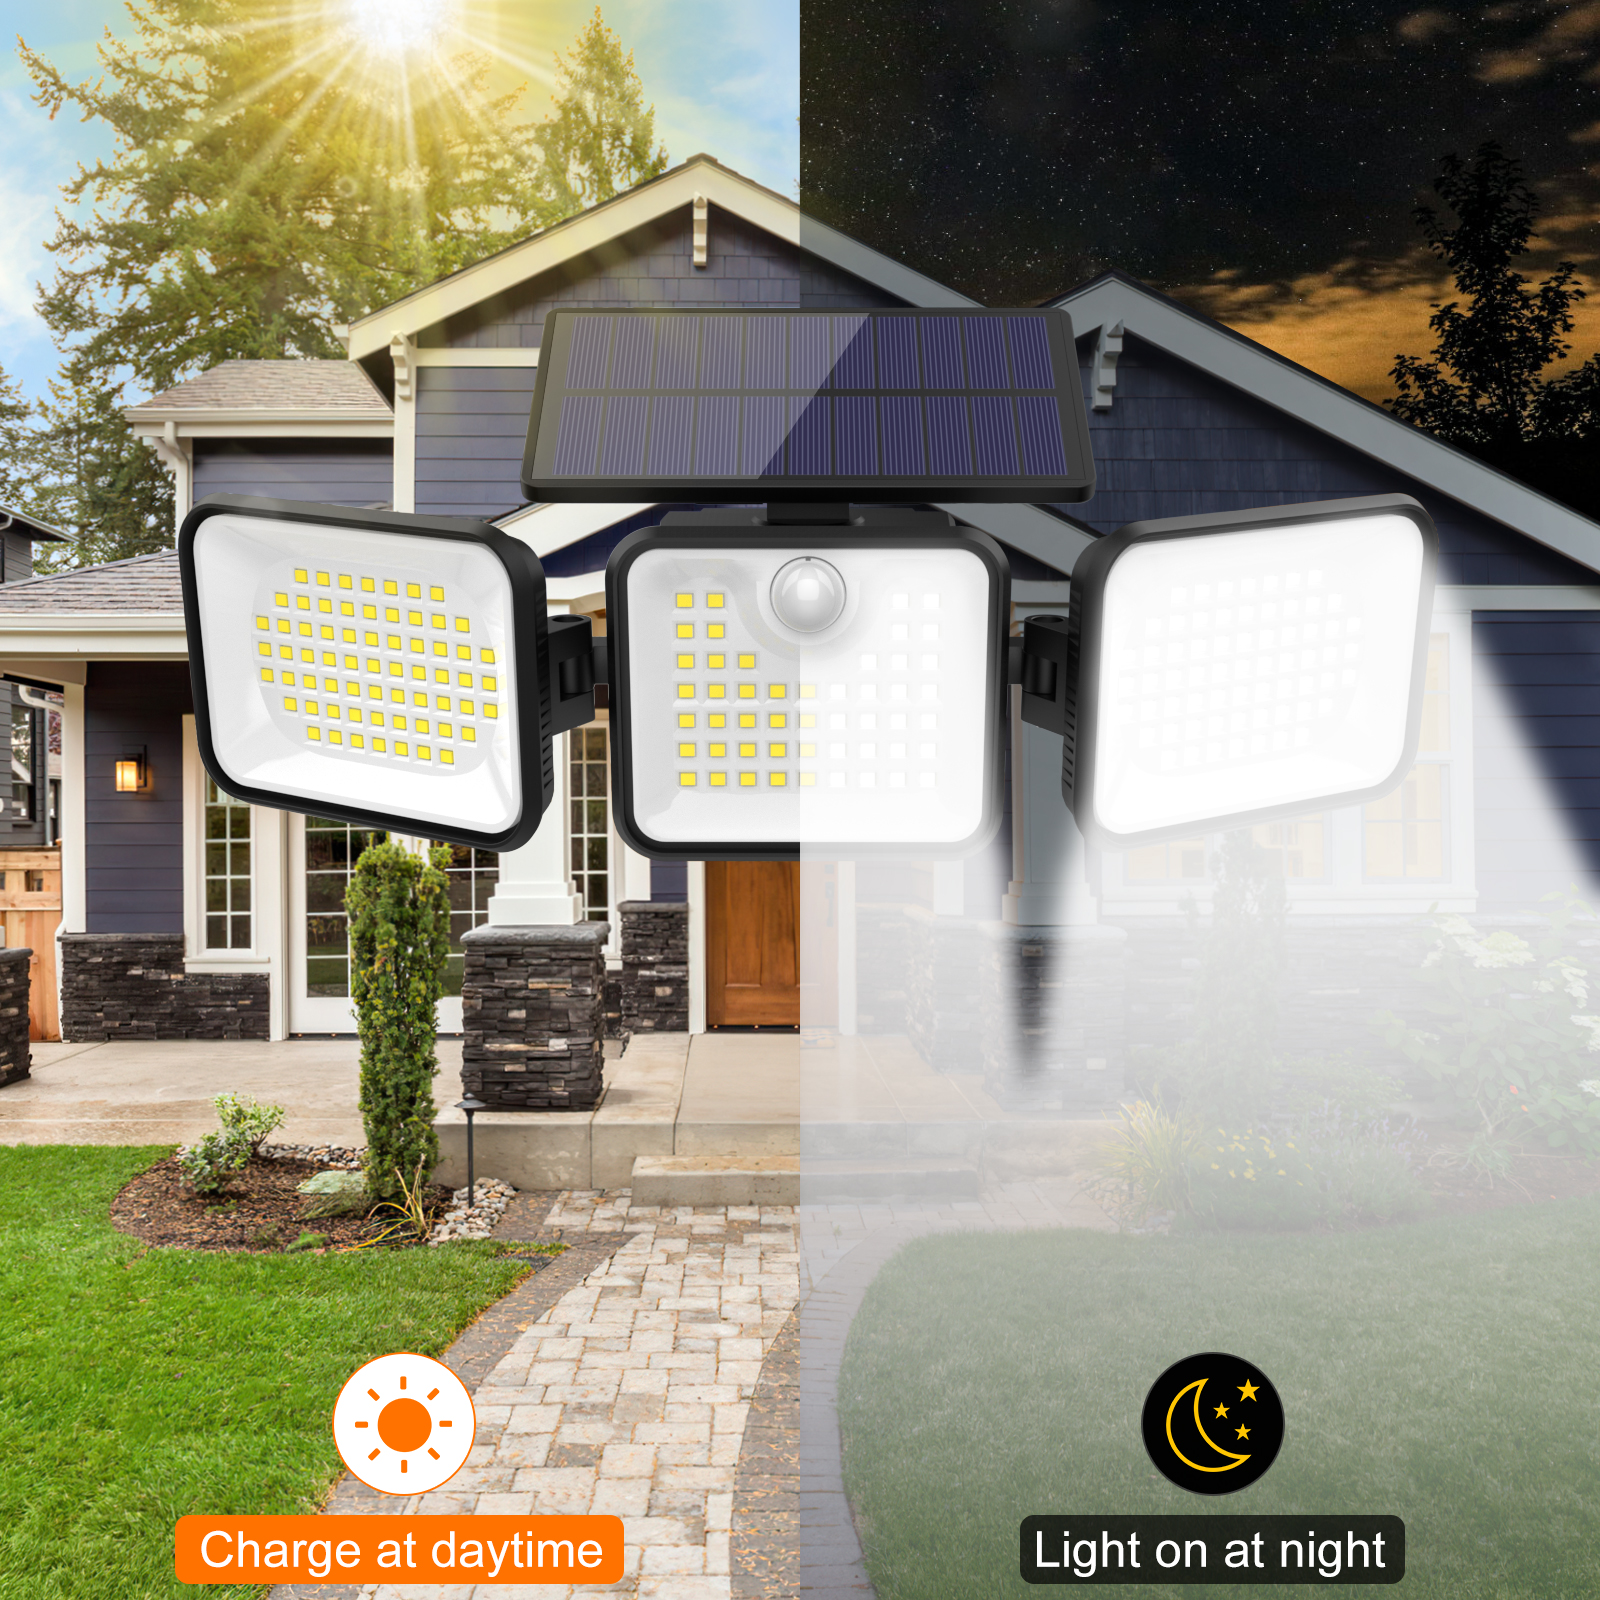 NEXPURE Solar Lights Outdoor, 180 LED Solar Motion Sensor Security Lights, Solar Flood Lights with 3 Lighting Modes, IP65 Waterproof for Garage Yard - image 2 of 8